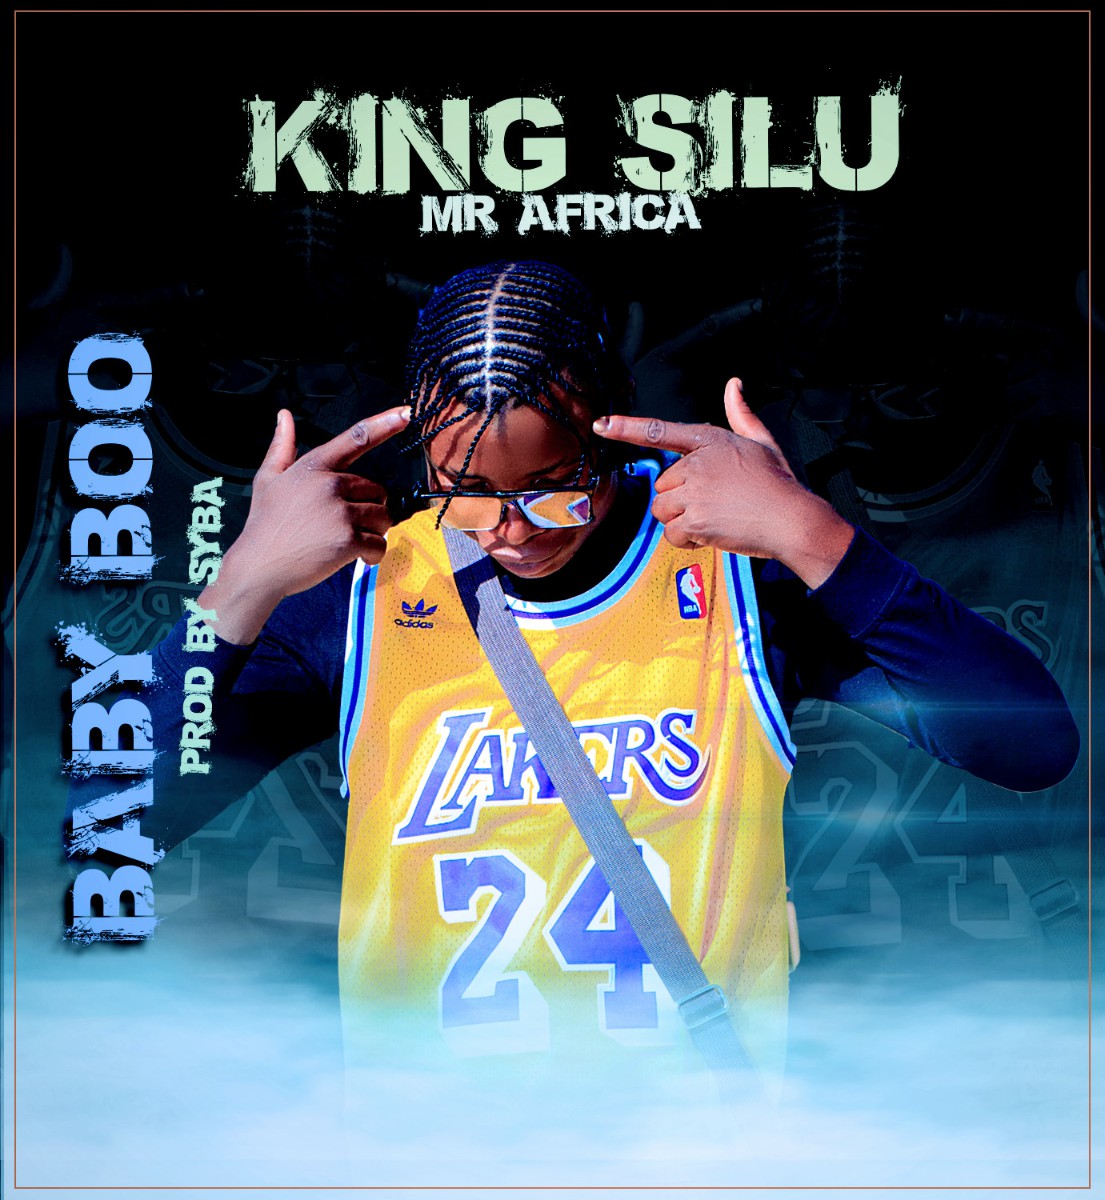 King Silu Mr Africa - Baby Boo (Prod. Syba)